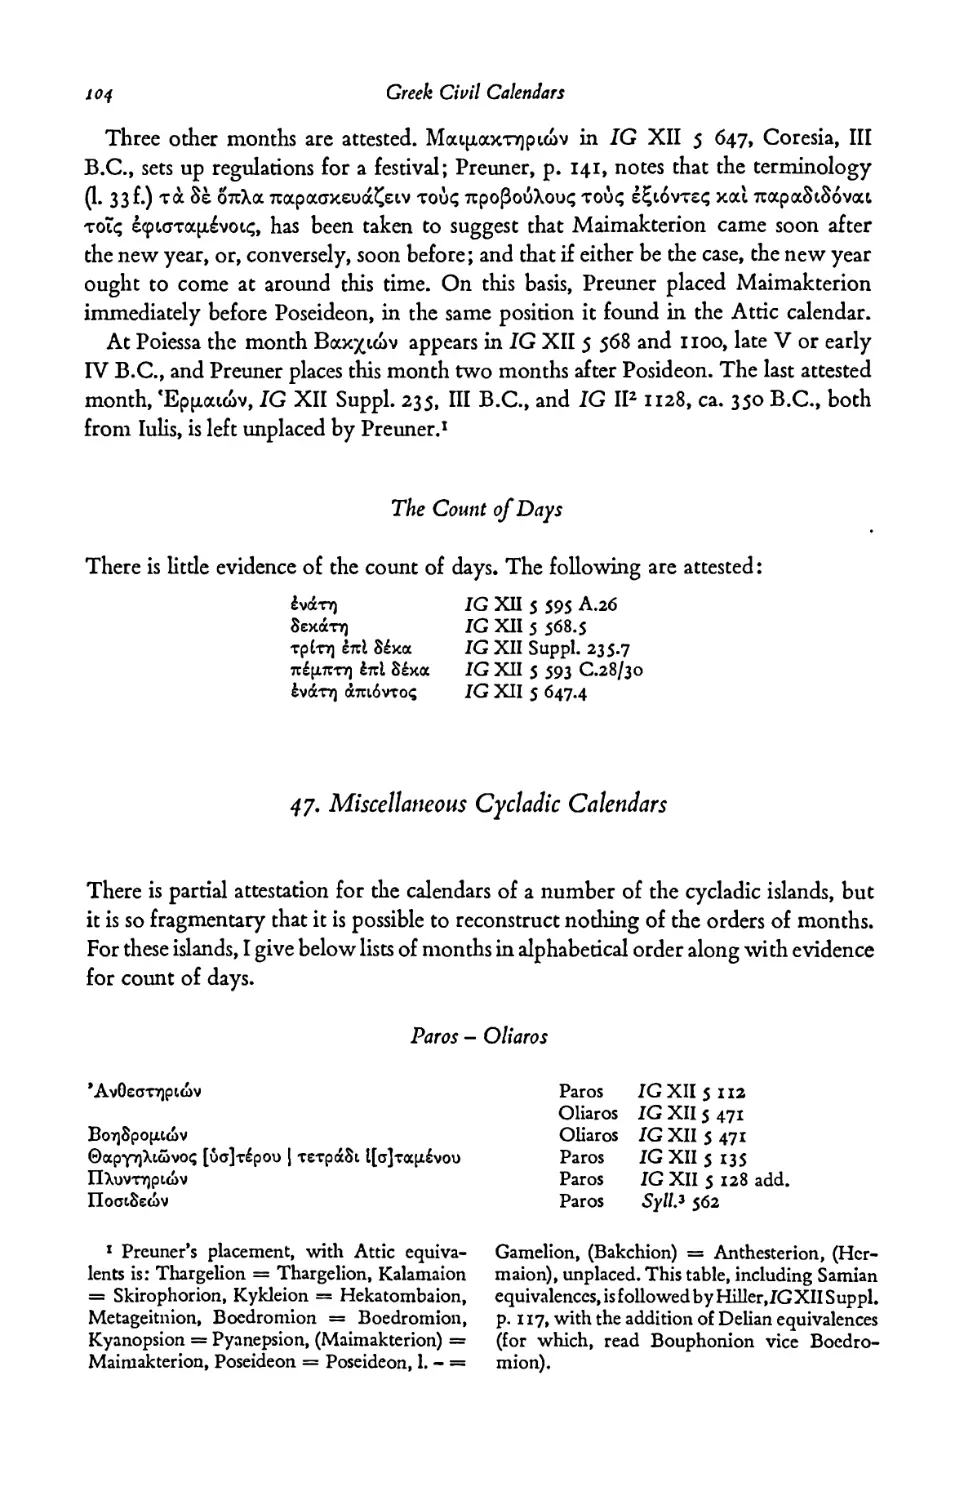 47. Miscellaneous Cycladic Calendars